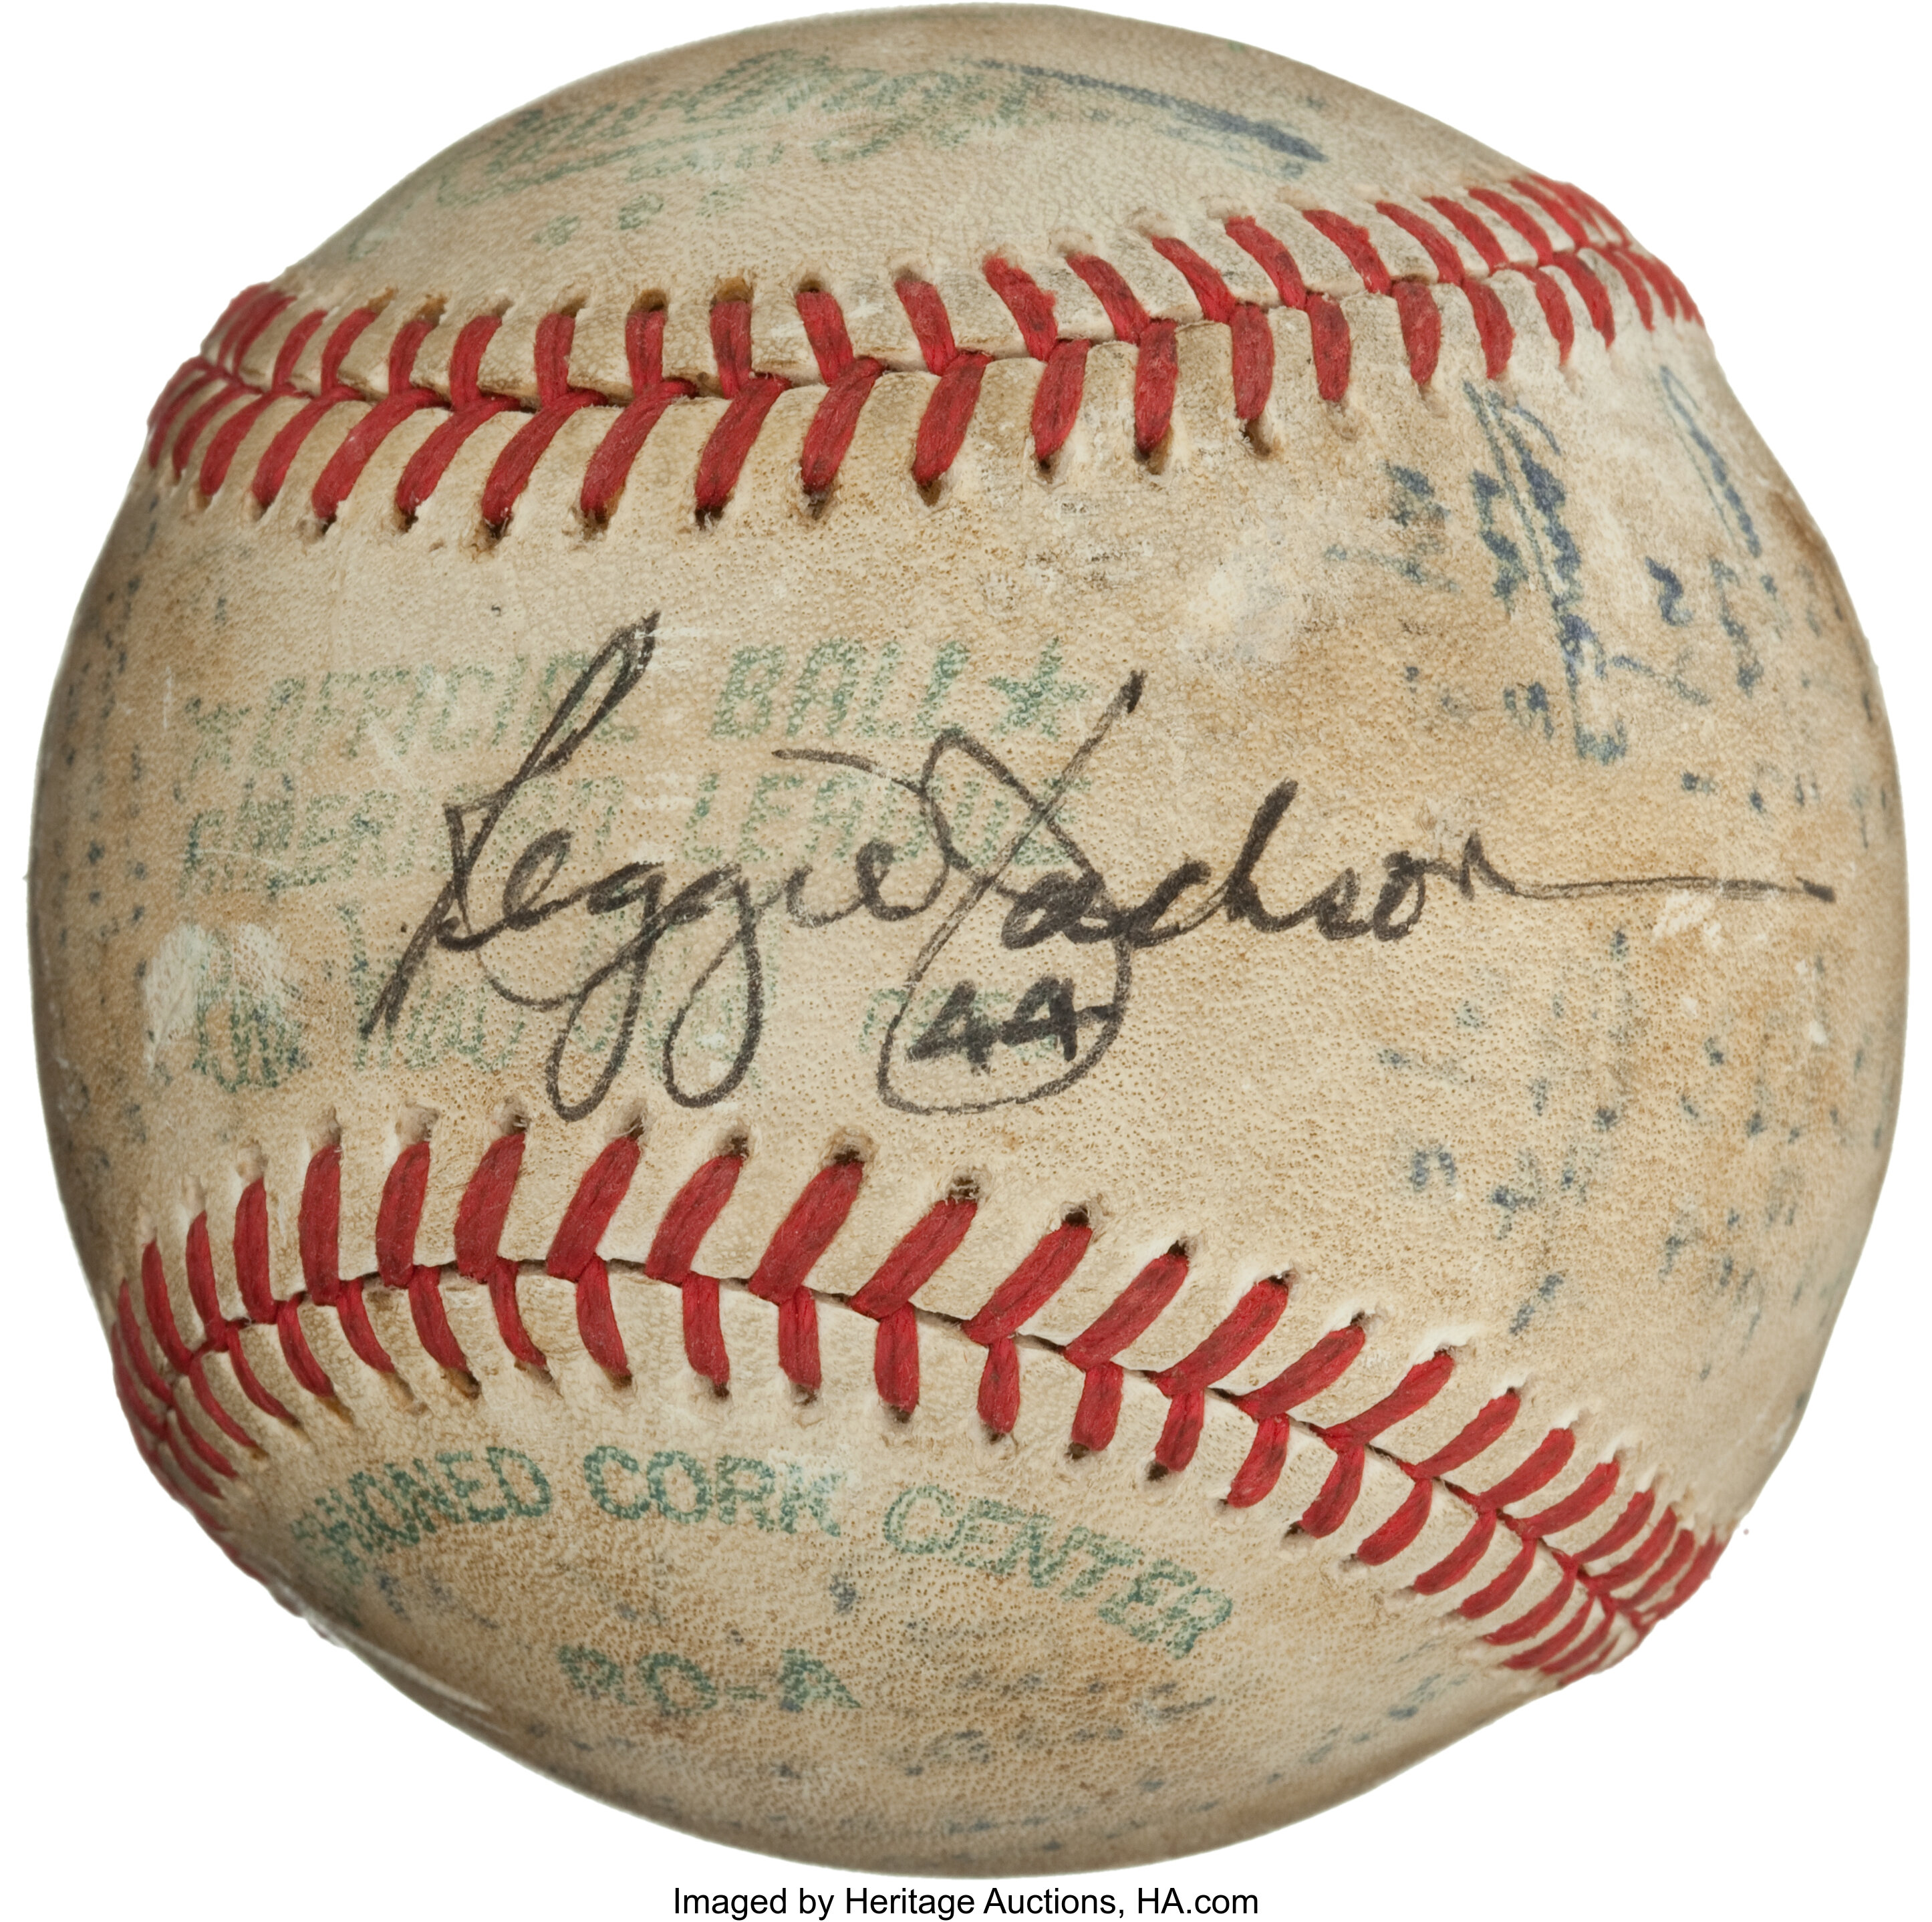 1977 Reggie Jackson Third Home Run Baseball from World Series Game, Lot  #80976